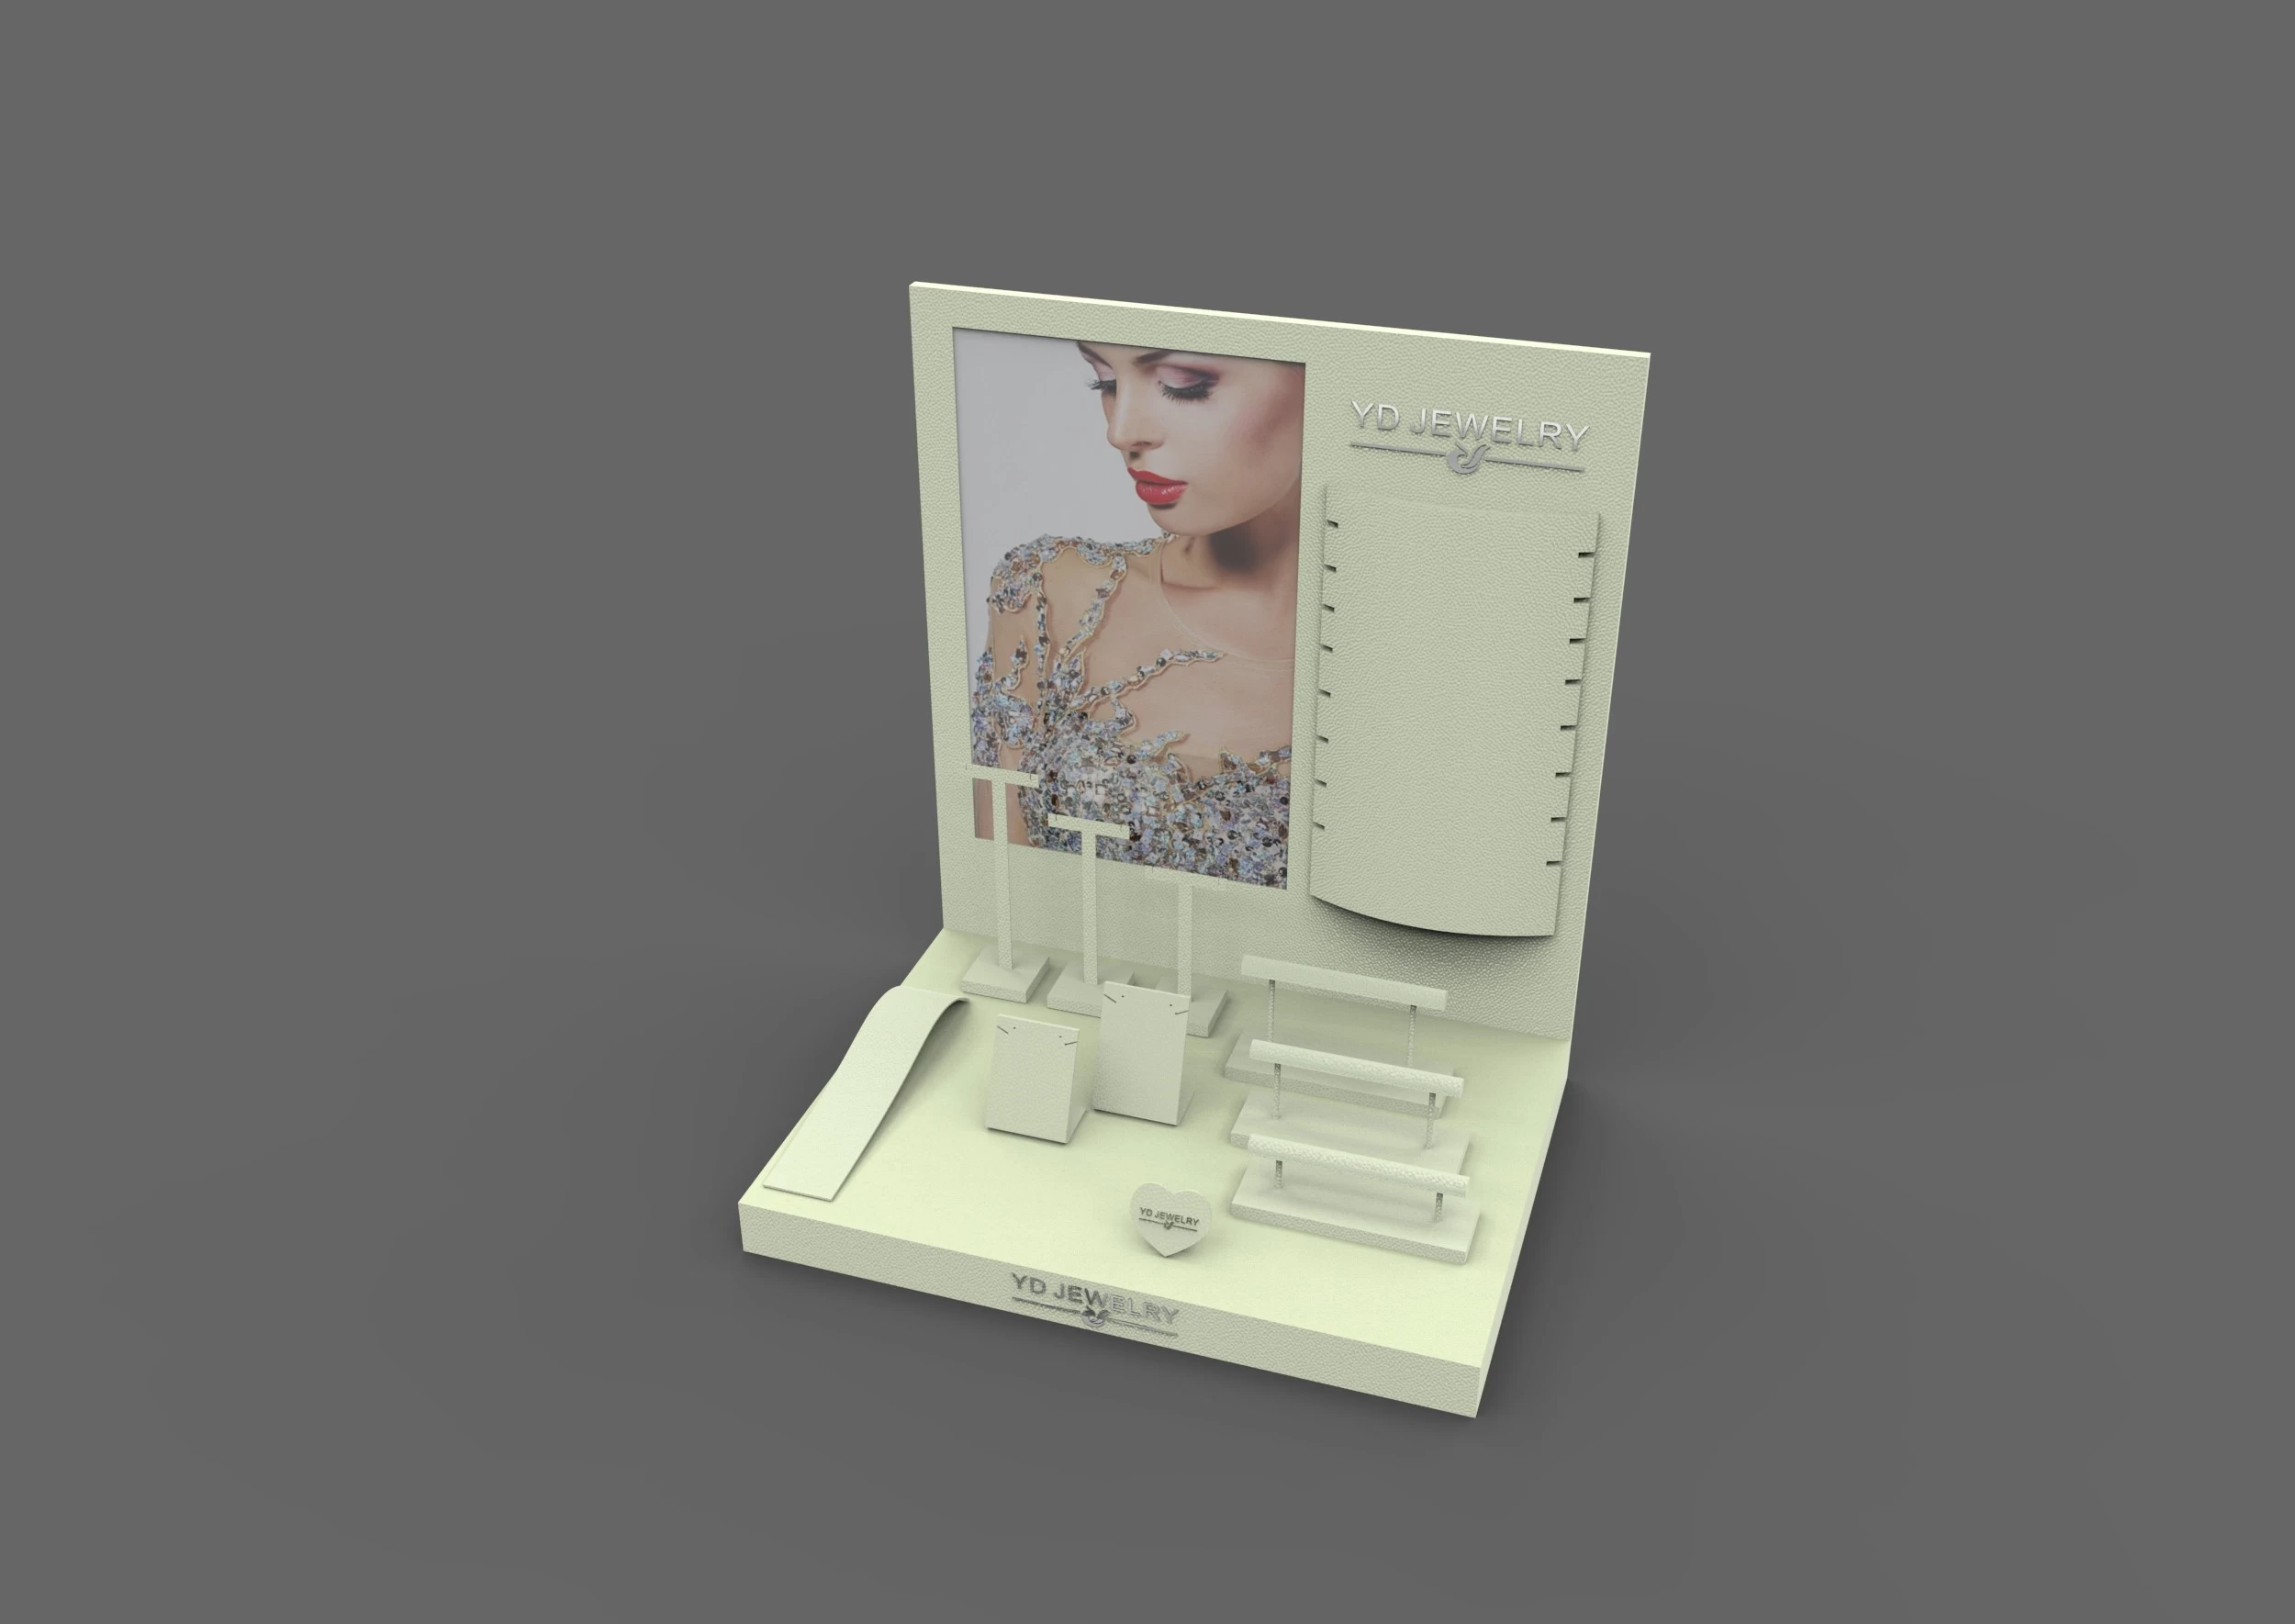 2015 newest jewelry display set design wooden jewelry display set customize